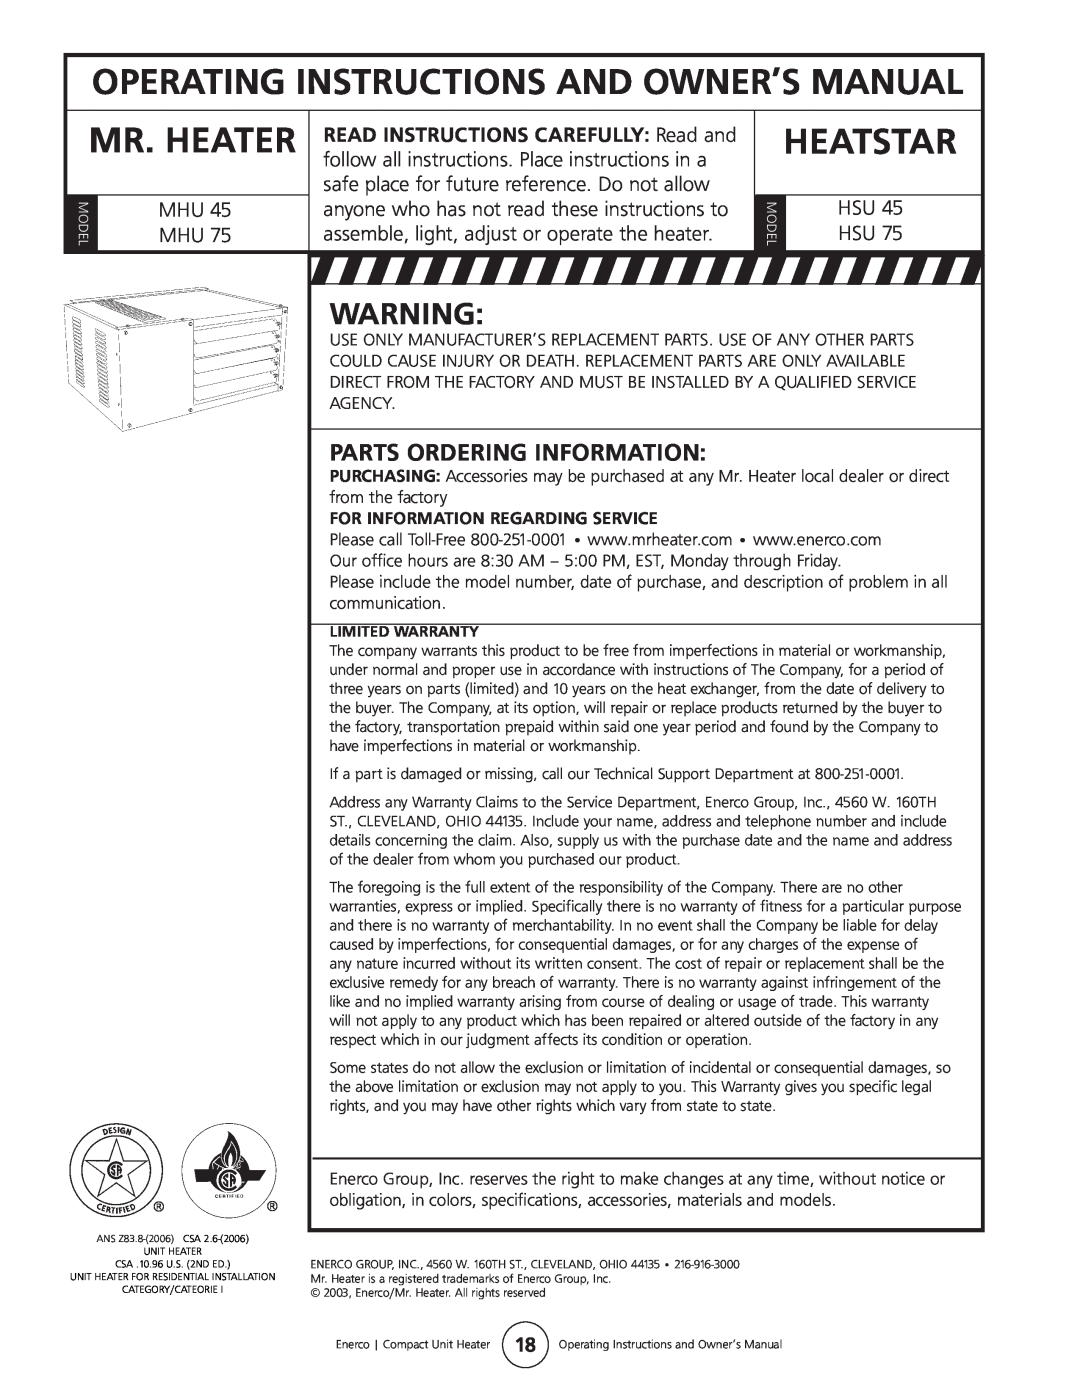 Enerco HSU 75, HSU 45 operating instructions Parts Ordering Information, Mr. Heater, Heatstar 